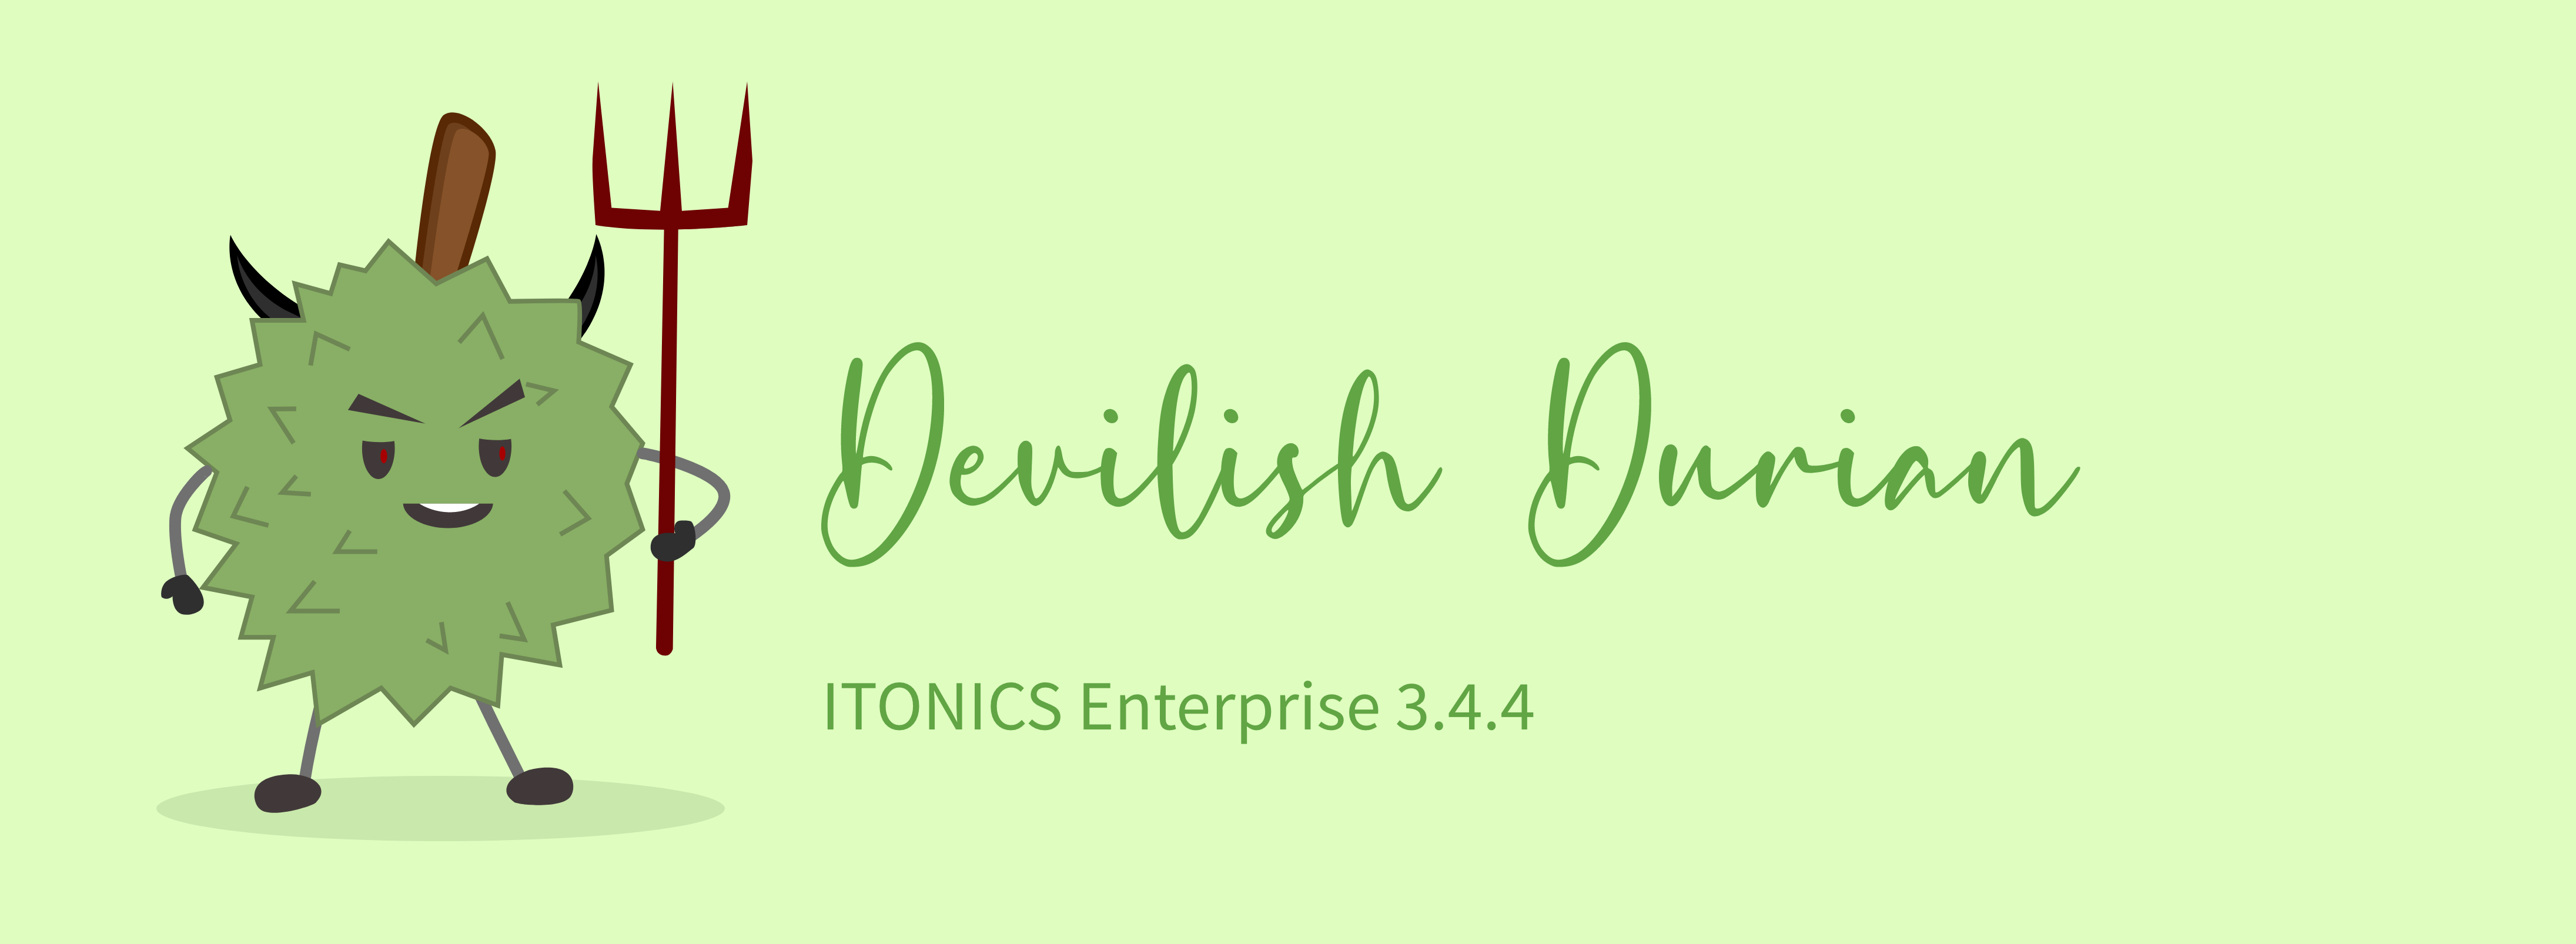 ITONICS_Enterprise_3.4.4.png